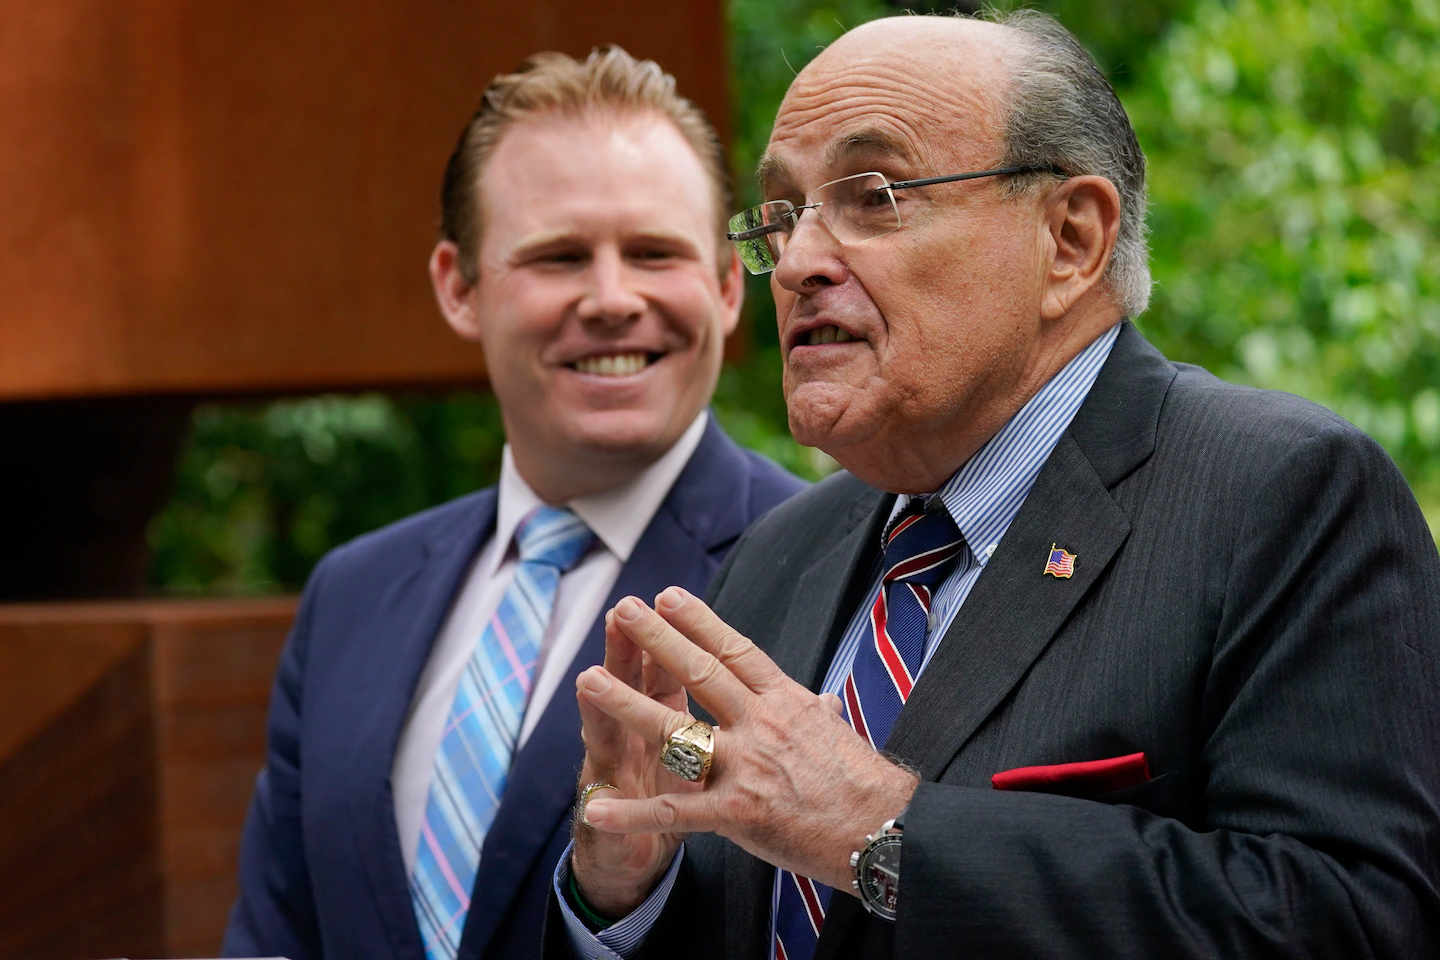 Rudy Giuliani slapped on back ‘over politics’ following Roe decision